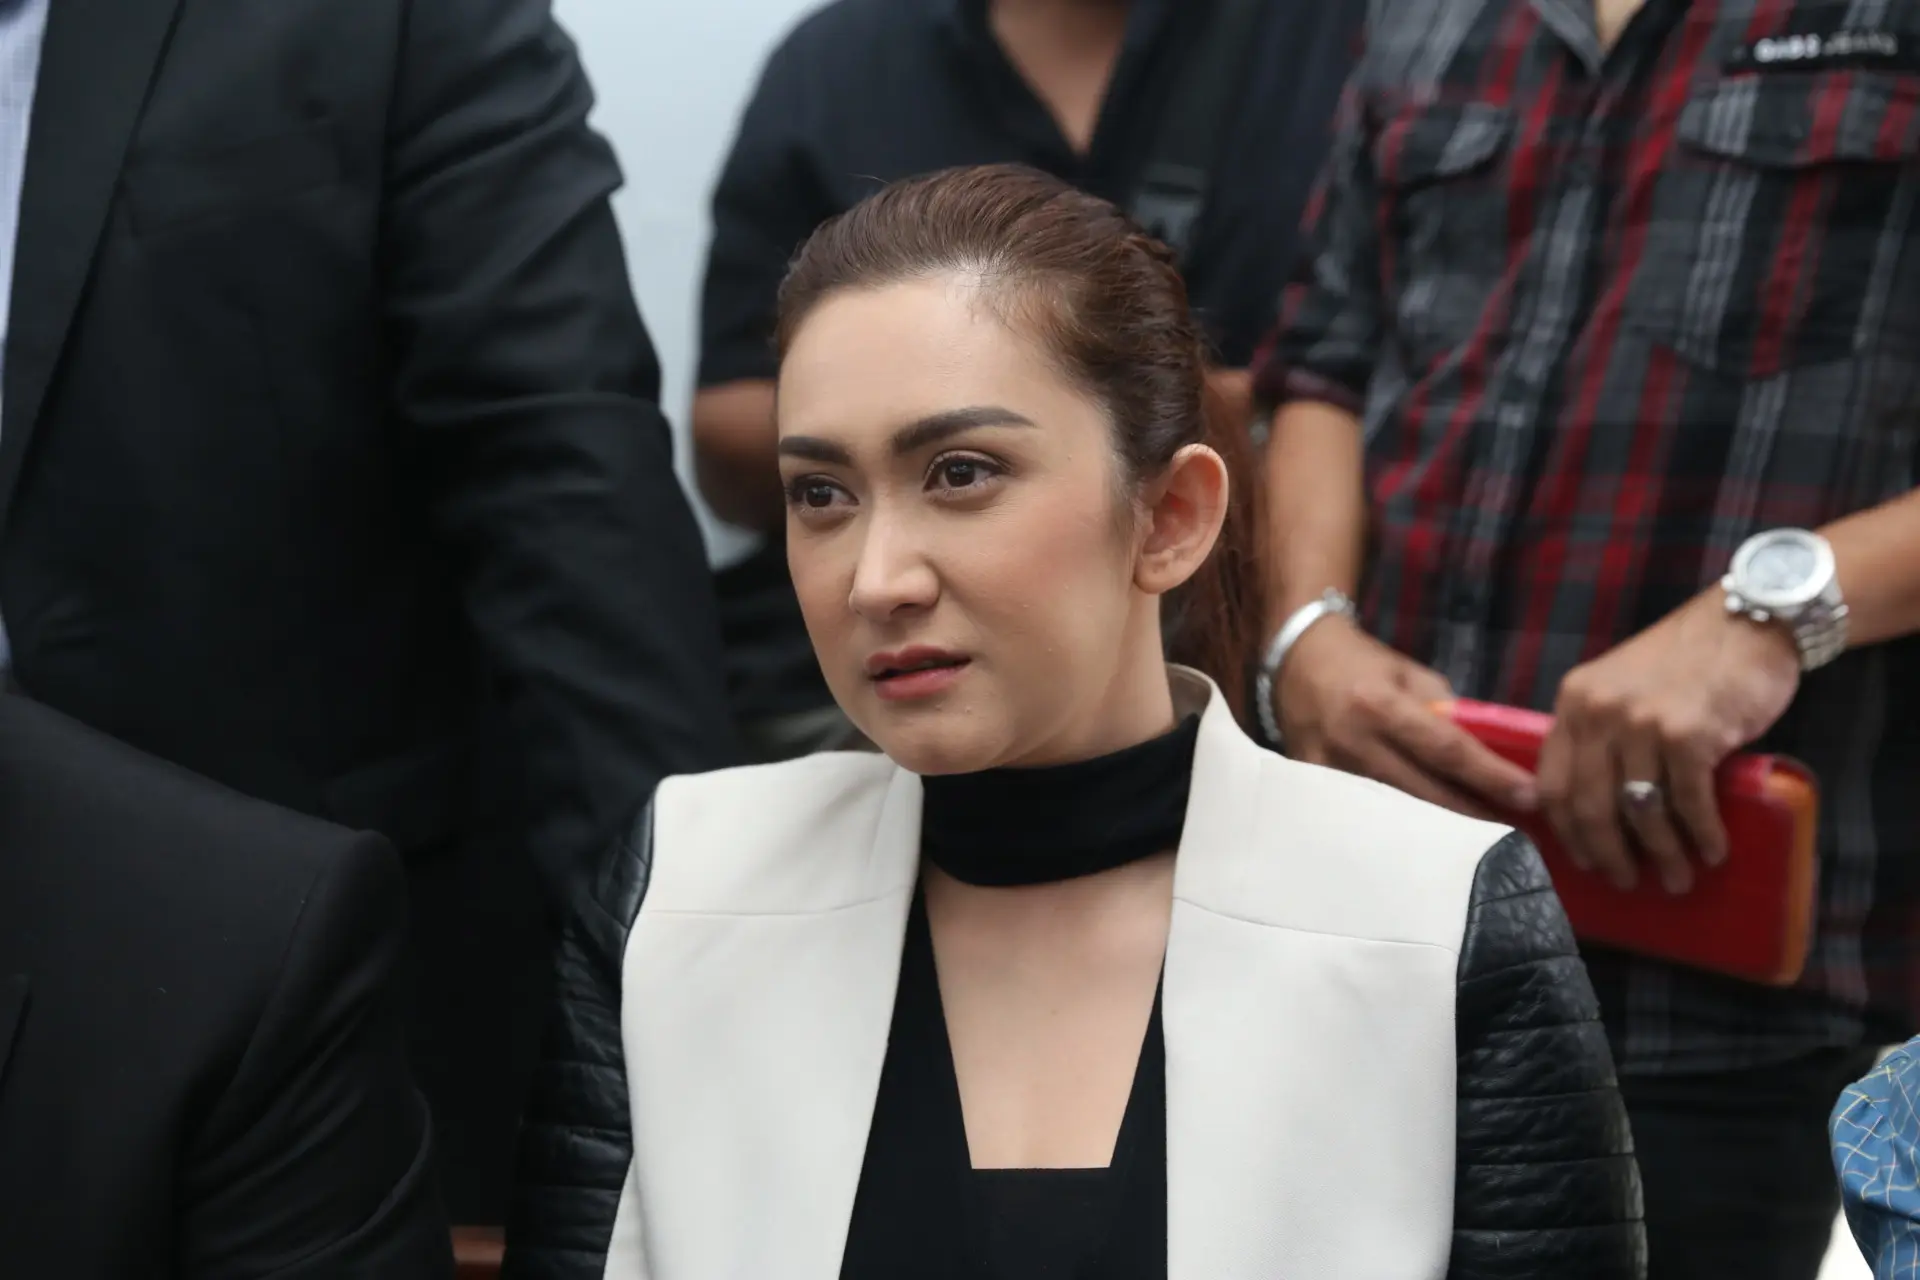 Sekitar pukul 10.00 WIB, Nafa hadir di PN Jakarta Selatan di kawasan Ampera. Wanita berusia 37 tahun ini hadir mengenakan outer berwarna putih yang dipadukan dalaman hitamnya. Kehadirannya pun sangat memukau warga sekitar. (Nurwahyunan/Bintang.com)